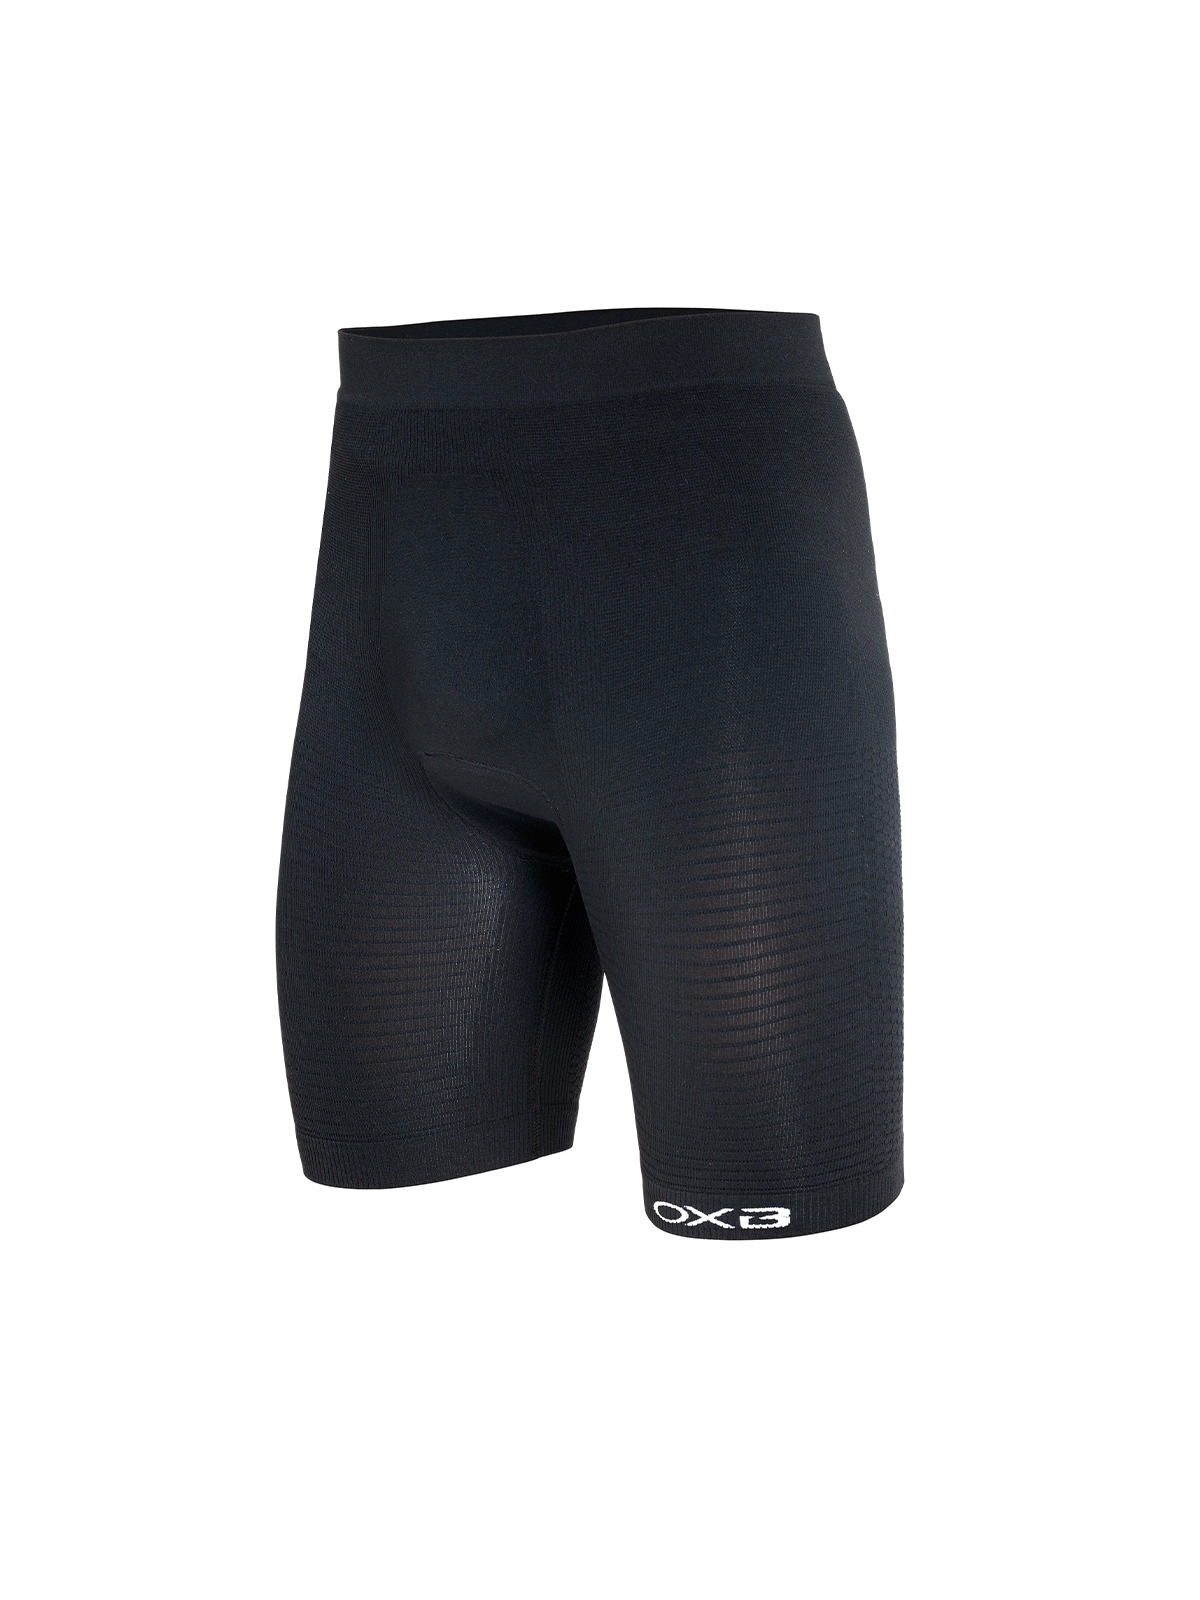 pantaloncino-shorts-pad-6027-bike-black-unisex